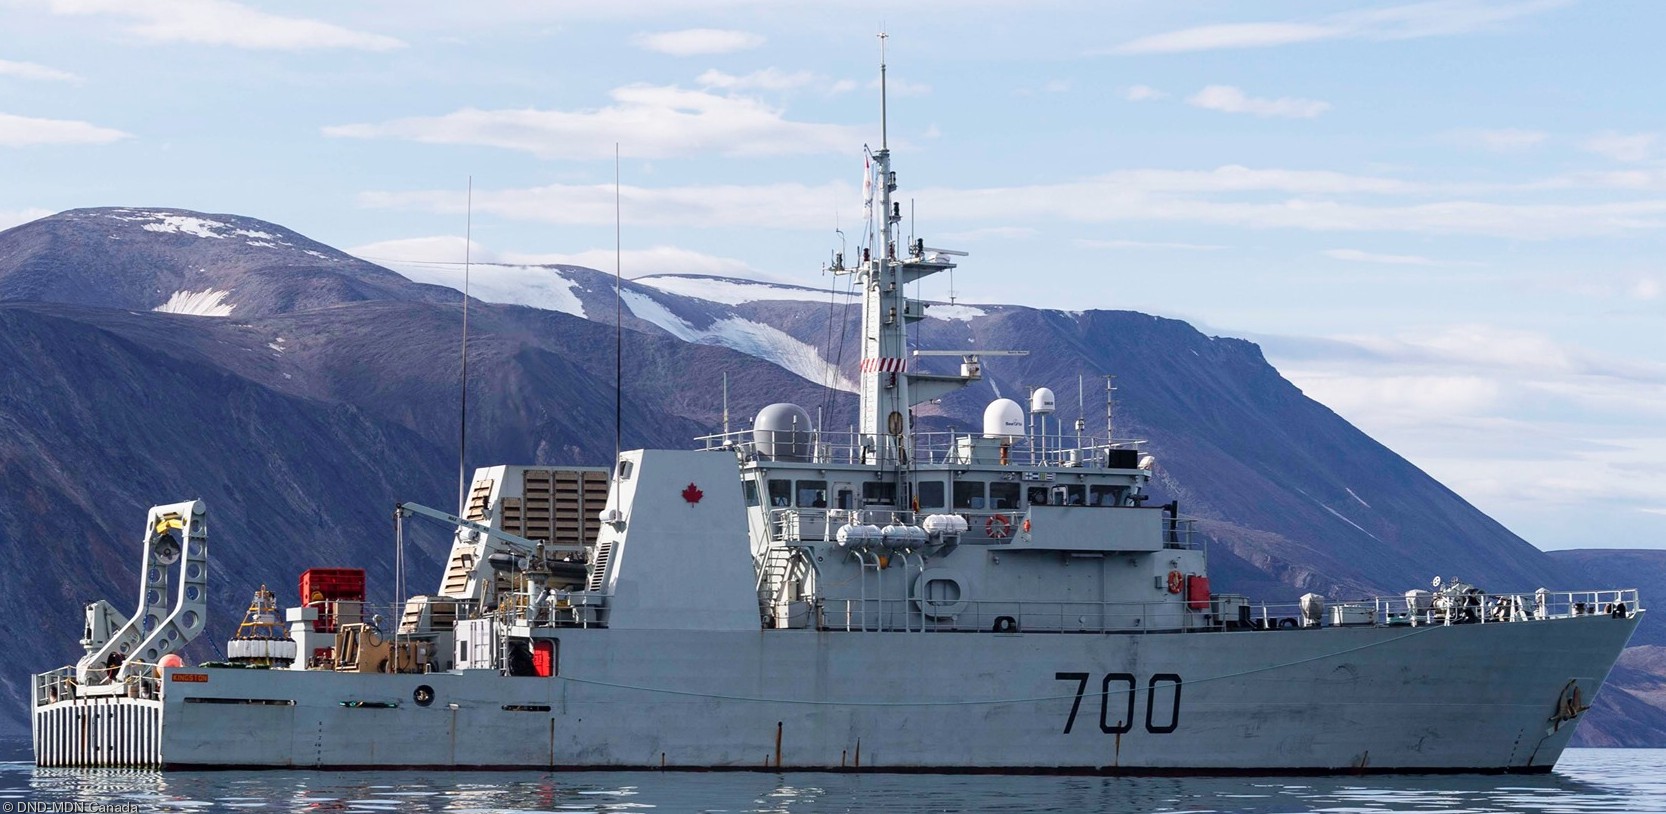 mm-700 hmcs kingston ncsm maritime coastal defence vessel mcdv royal canadian navy cfb halifax 05x